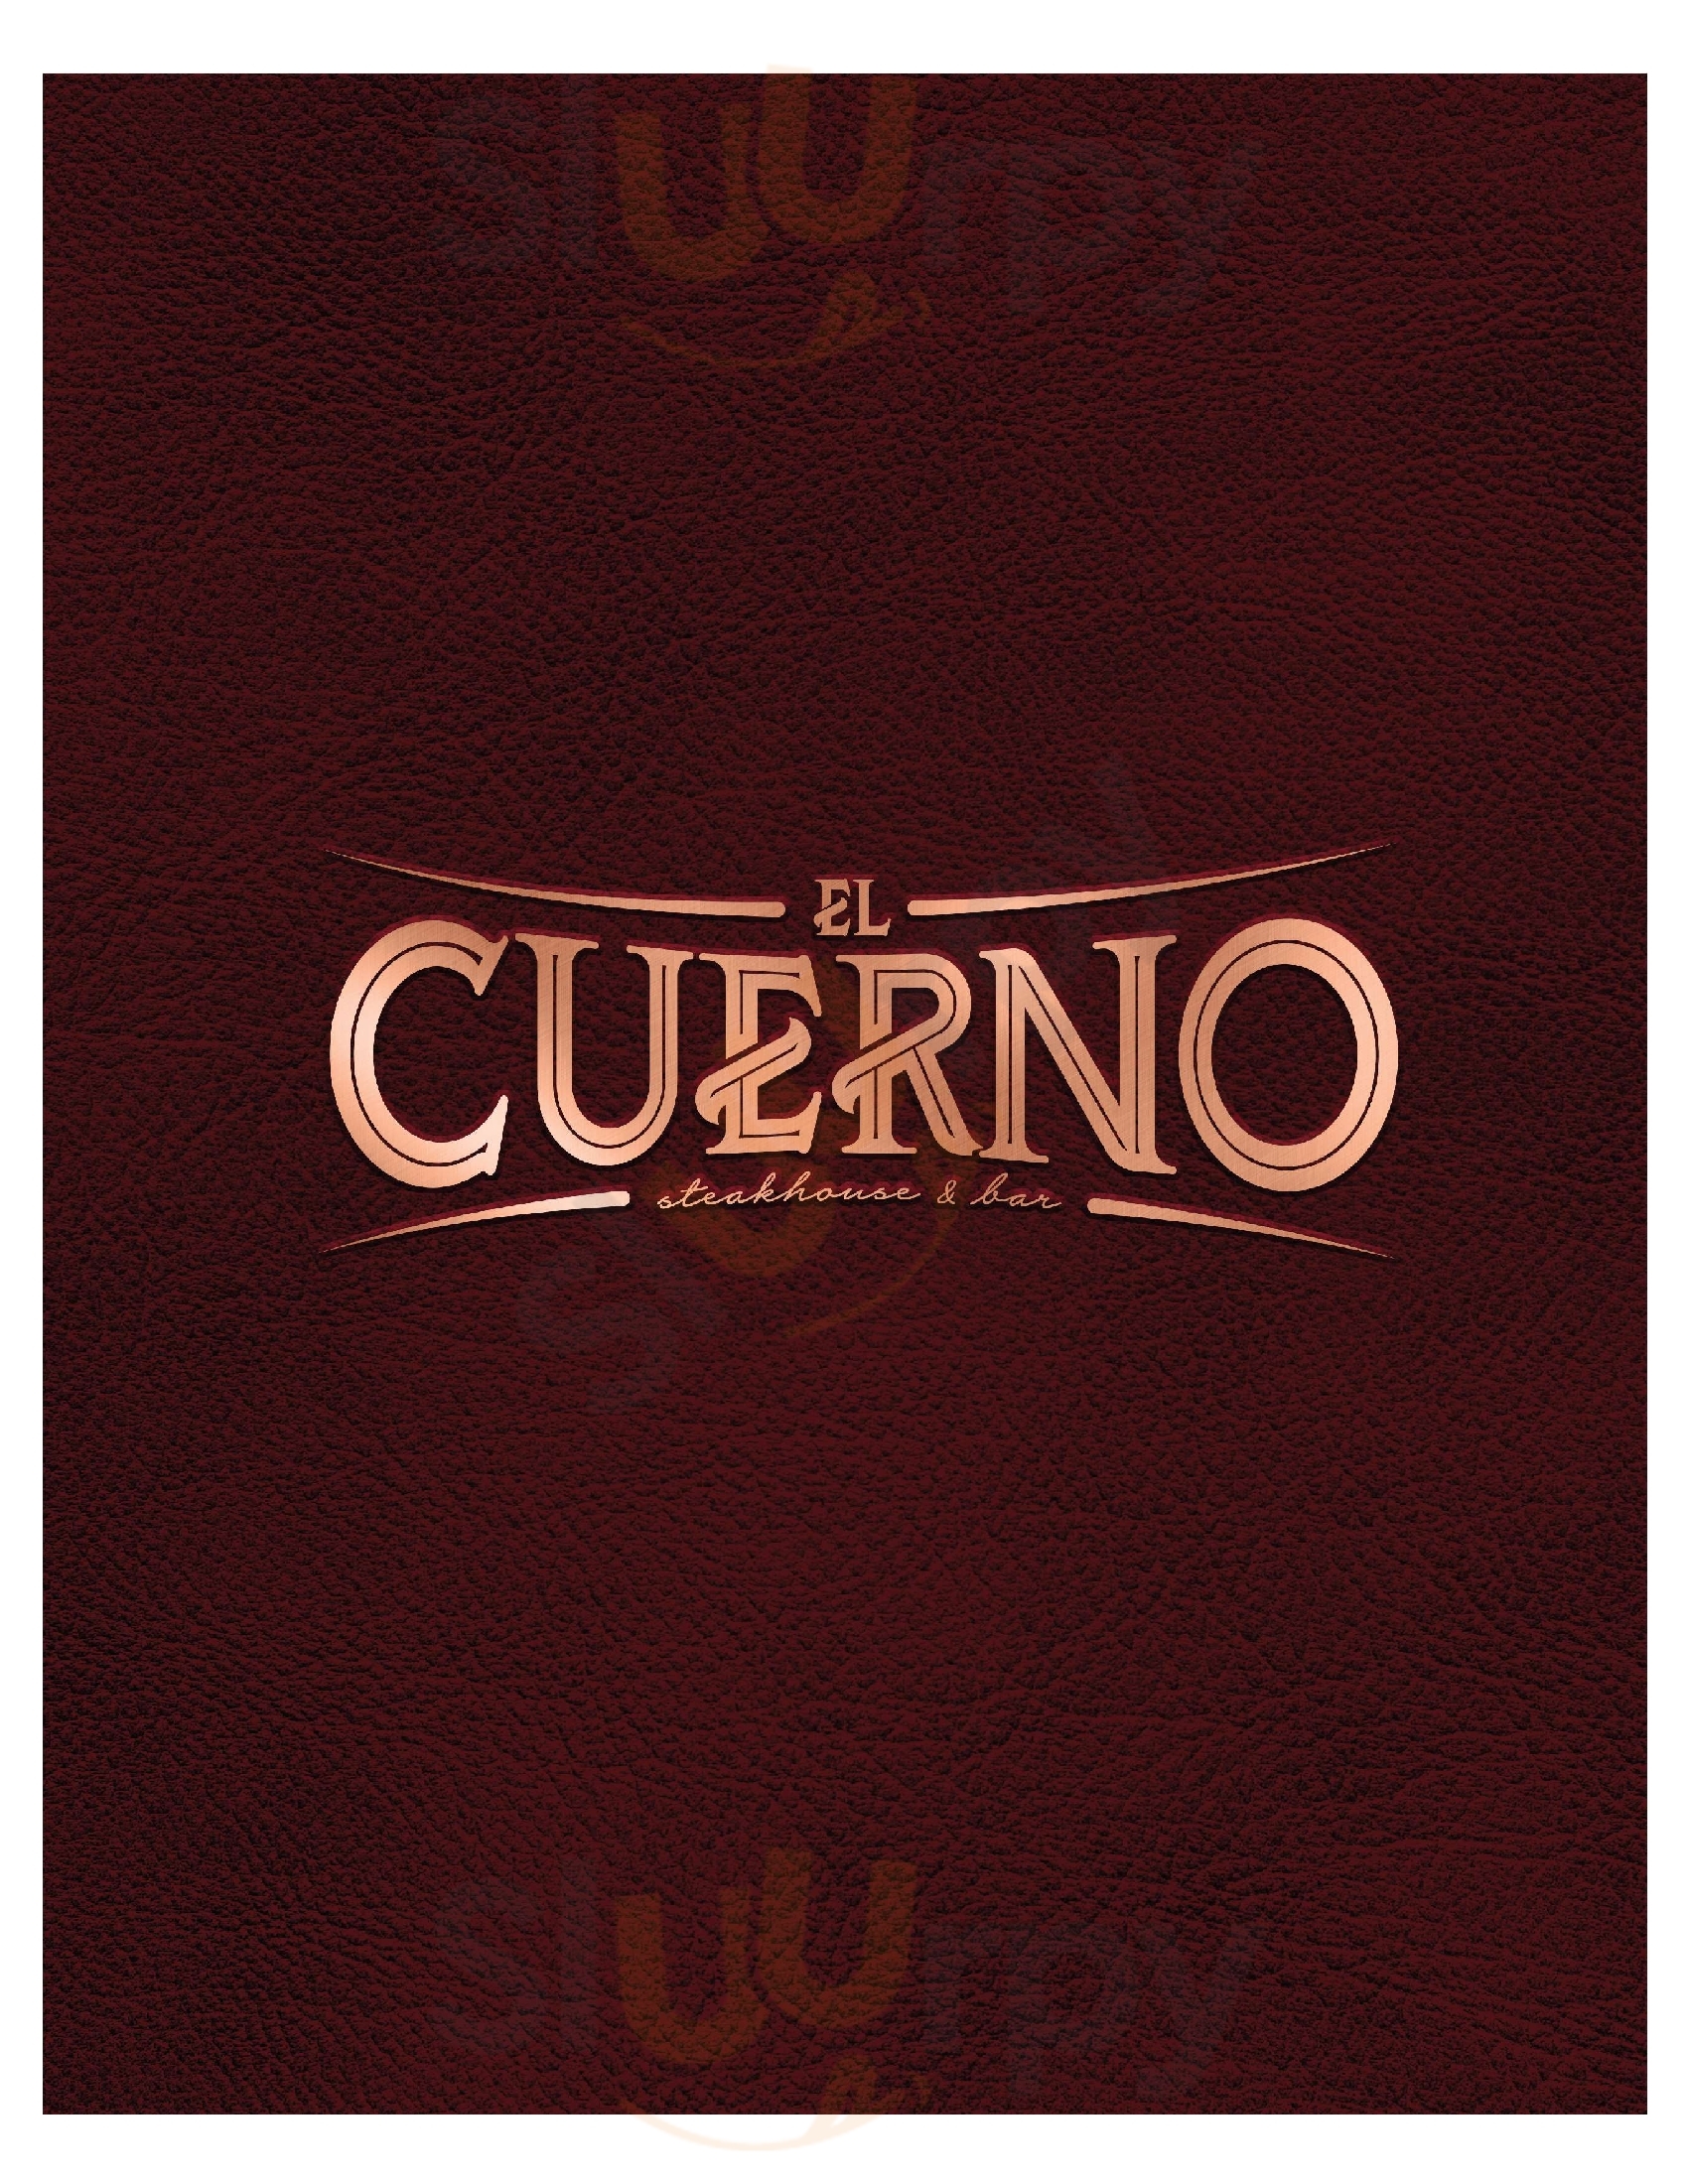 El Cuerno Steakhouse & Bar Bucaramanga Menu - 1